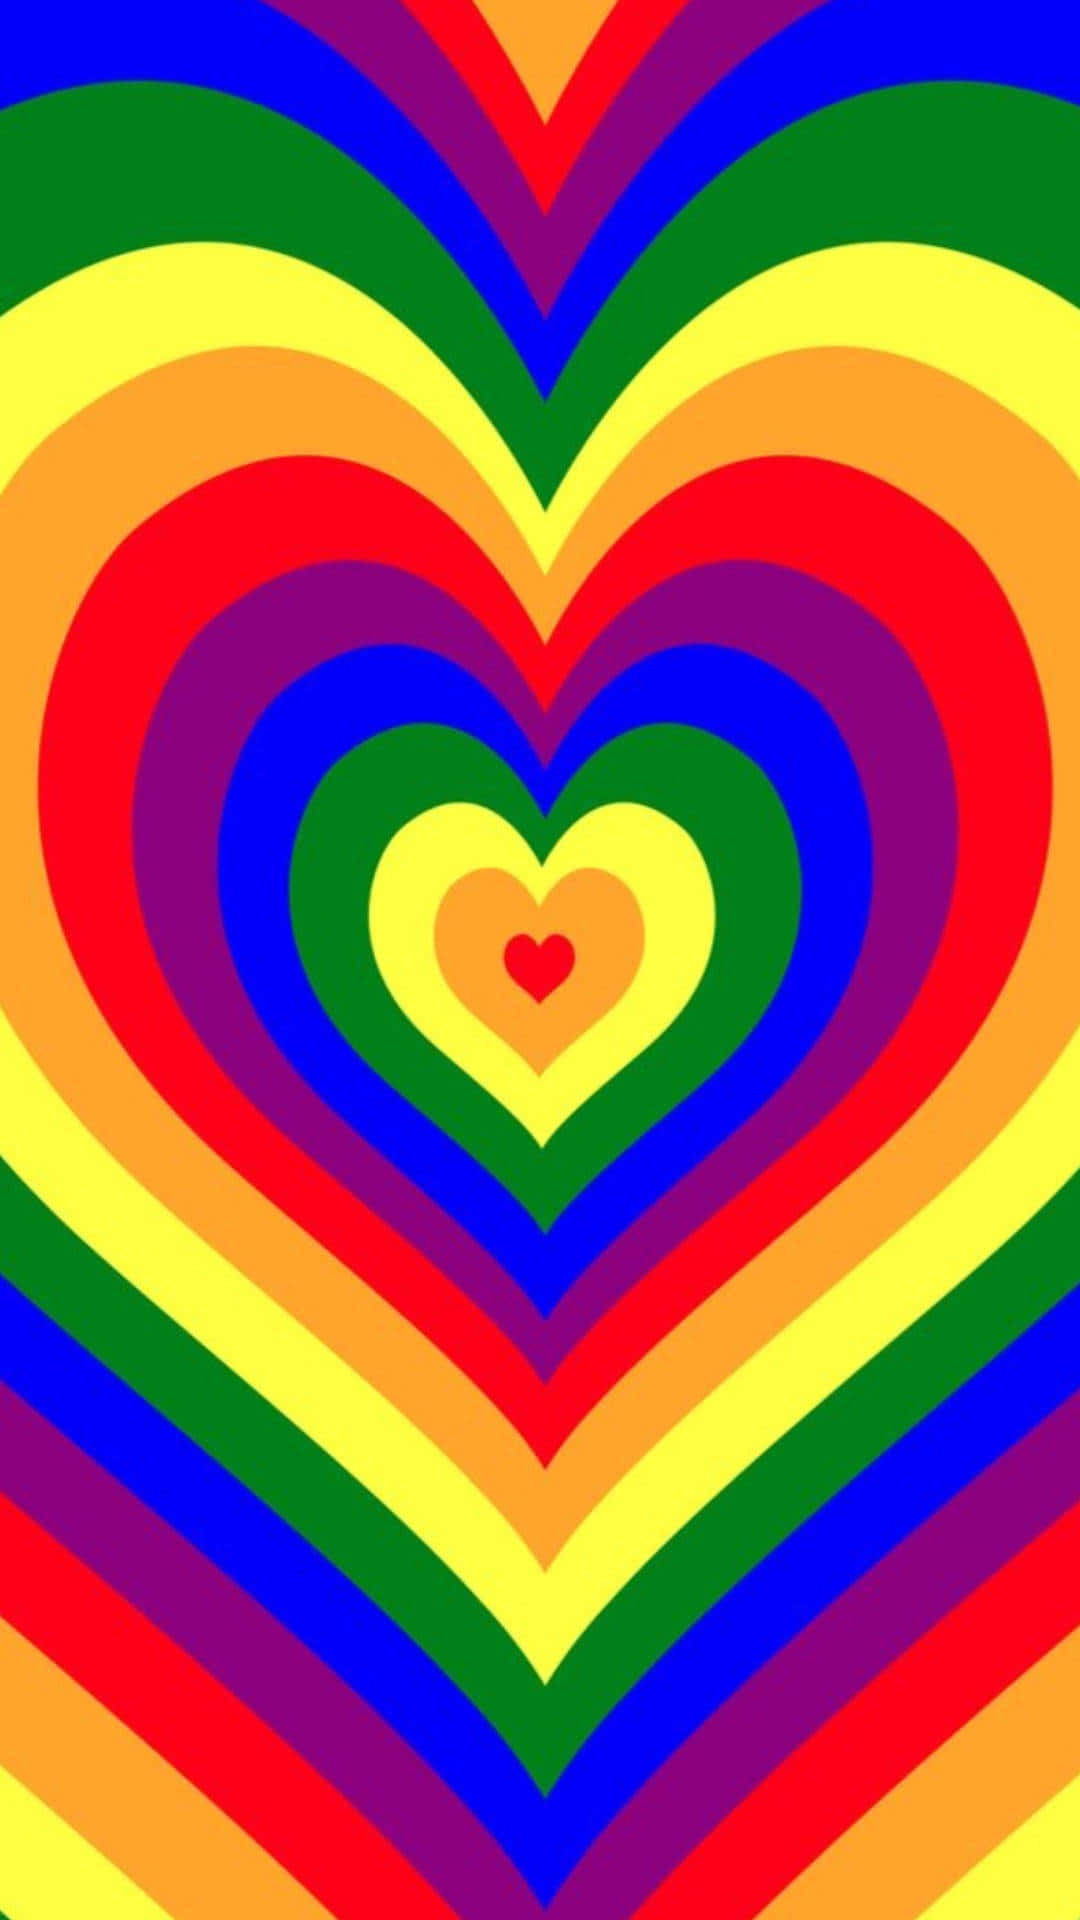 A Vibrant Rainbow Heart Background